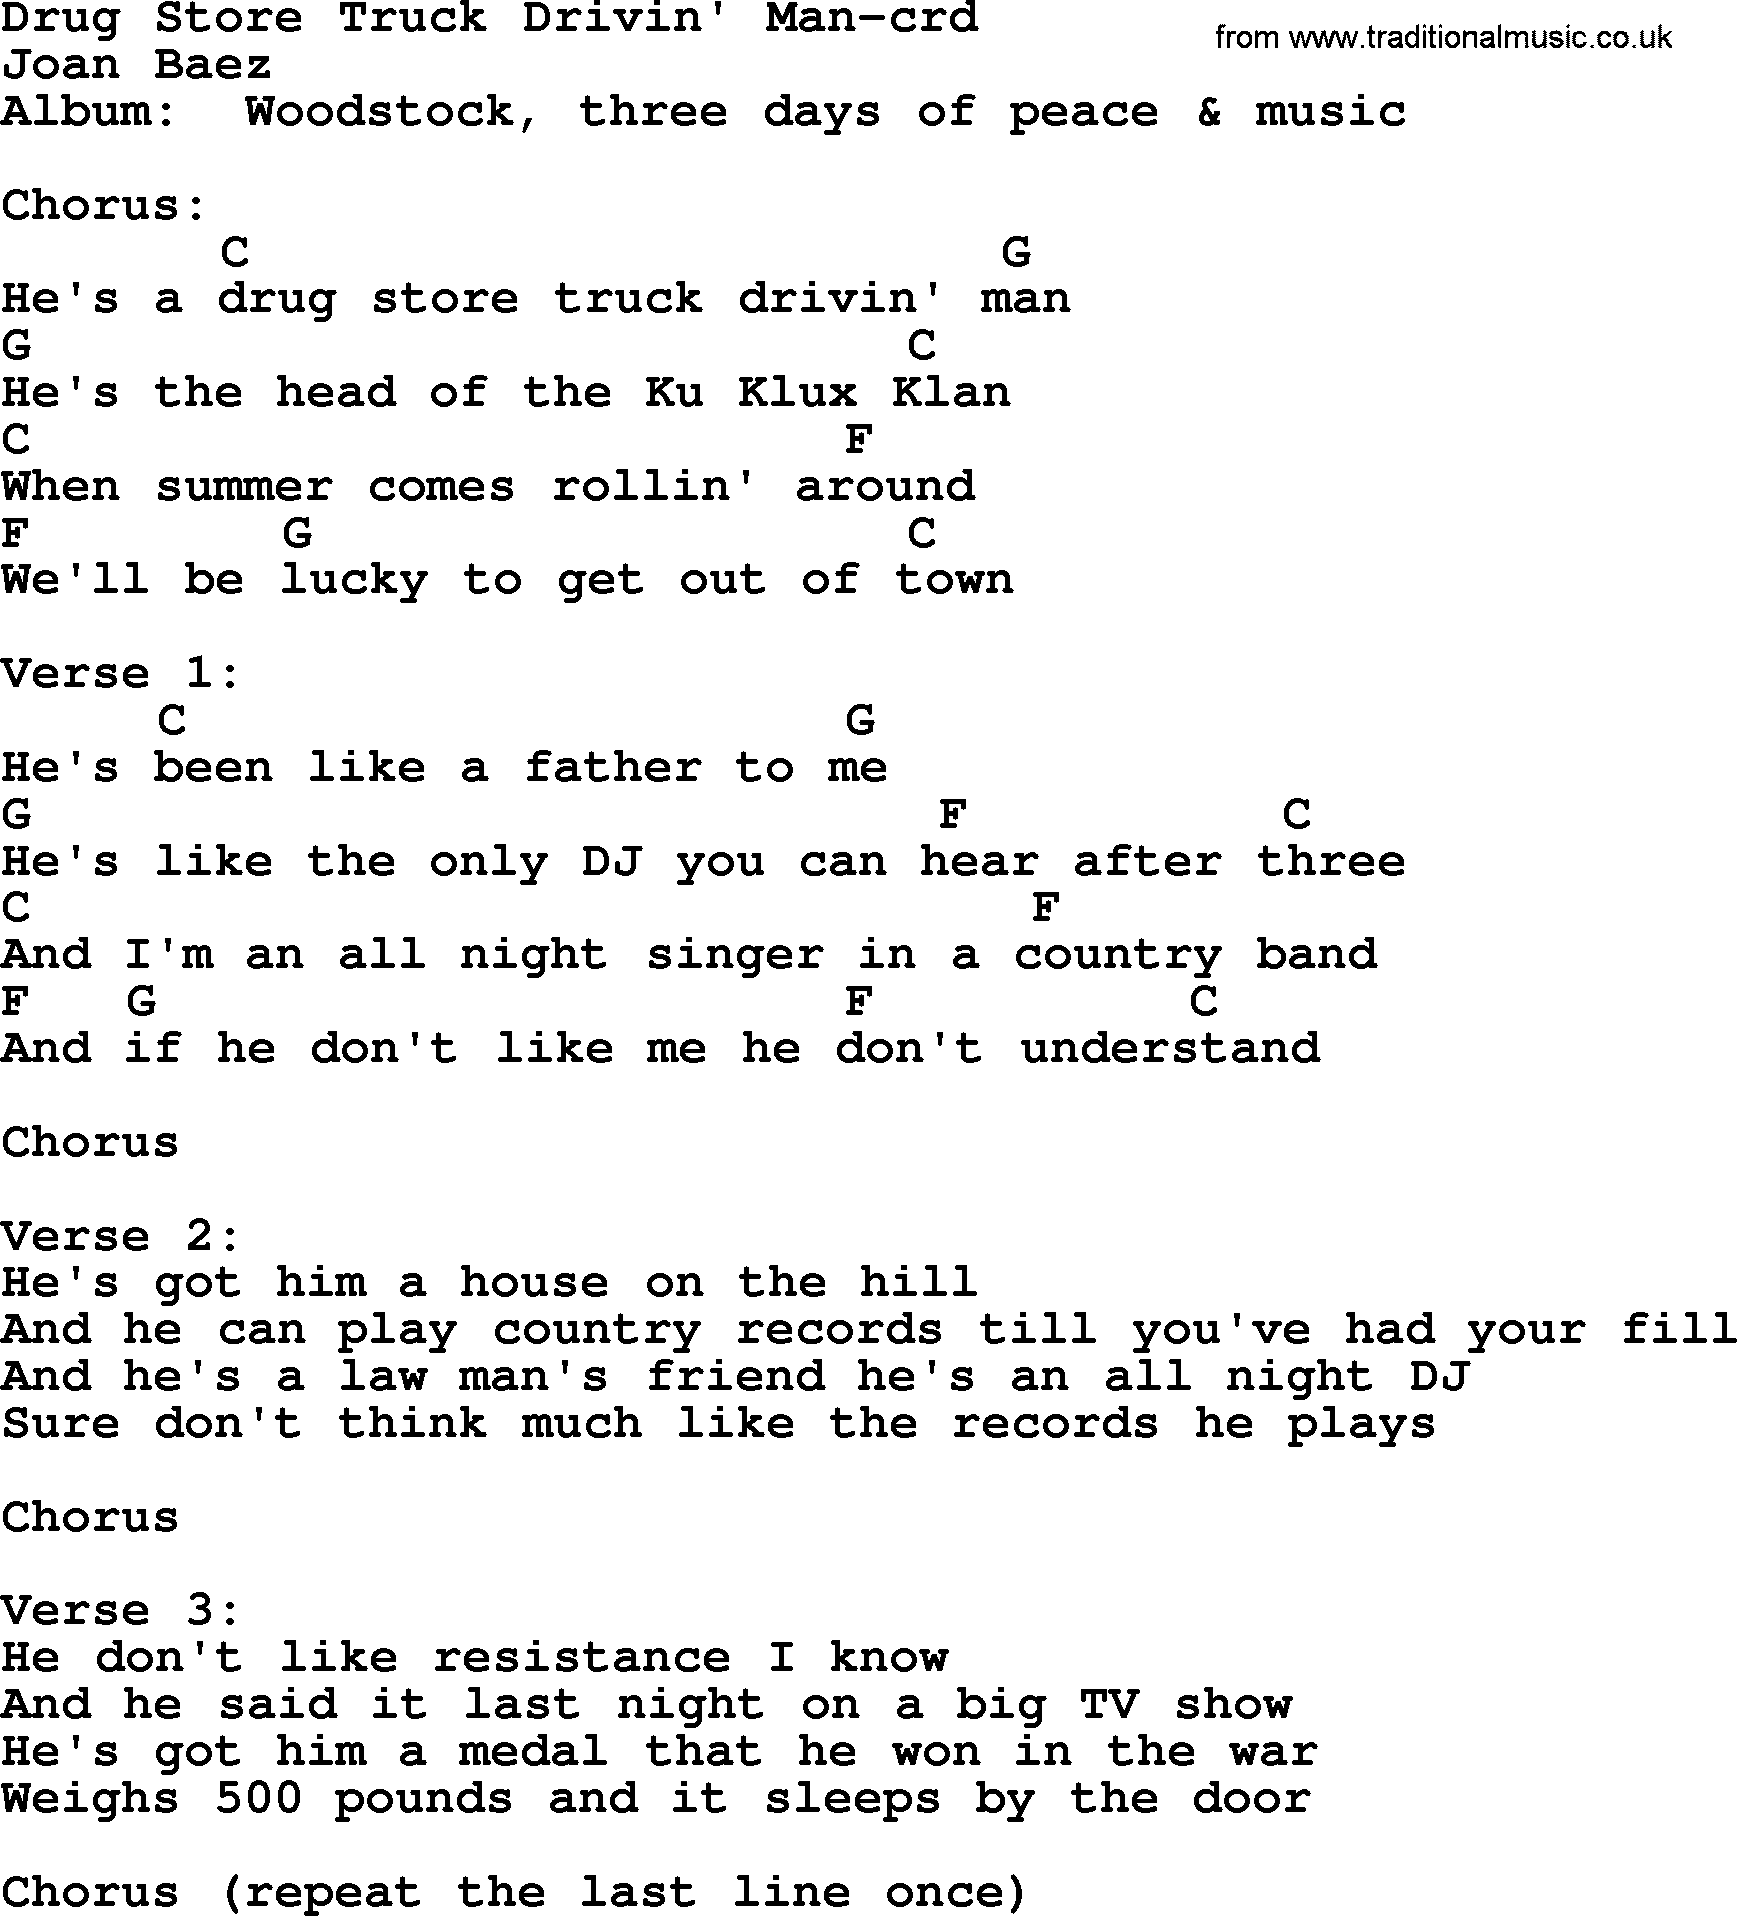 Joan Baez song Drug Store Truck Drivin' Man(1) lyrics and chords